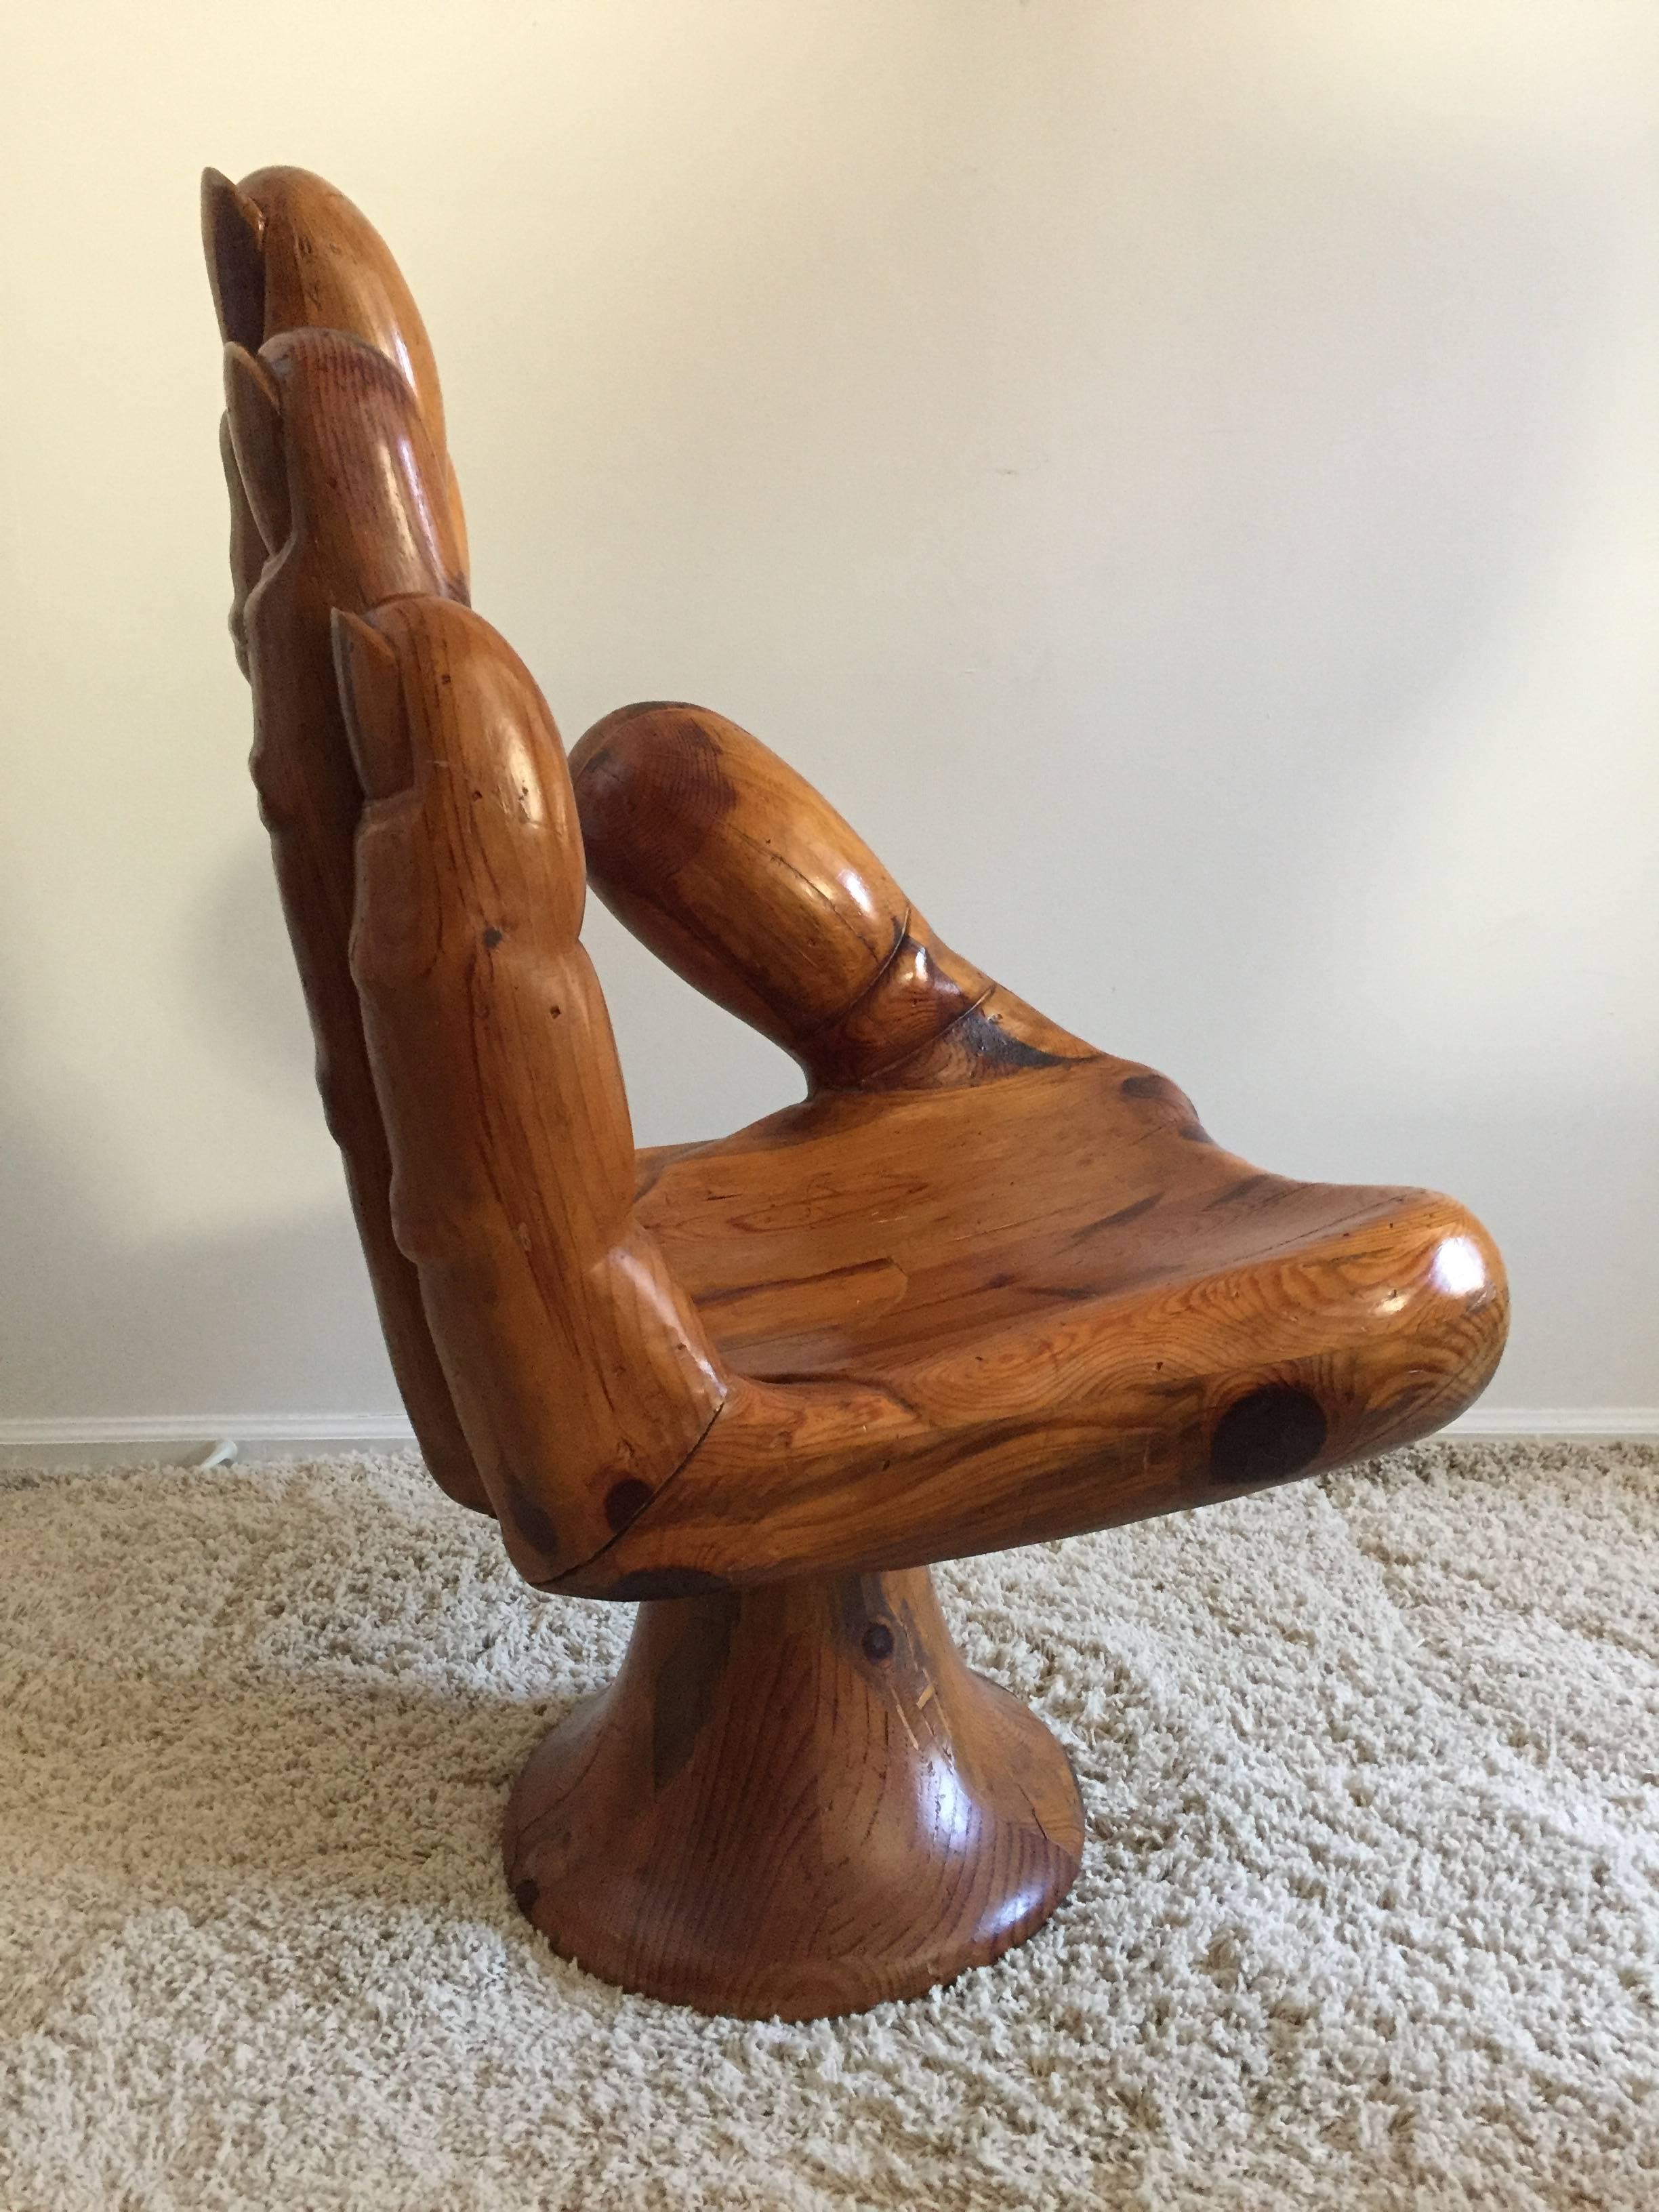 hand chair wooden